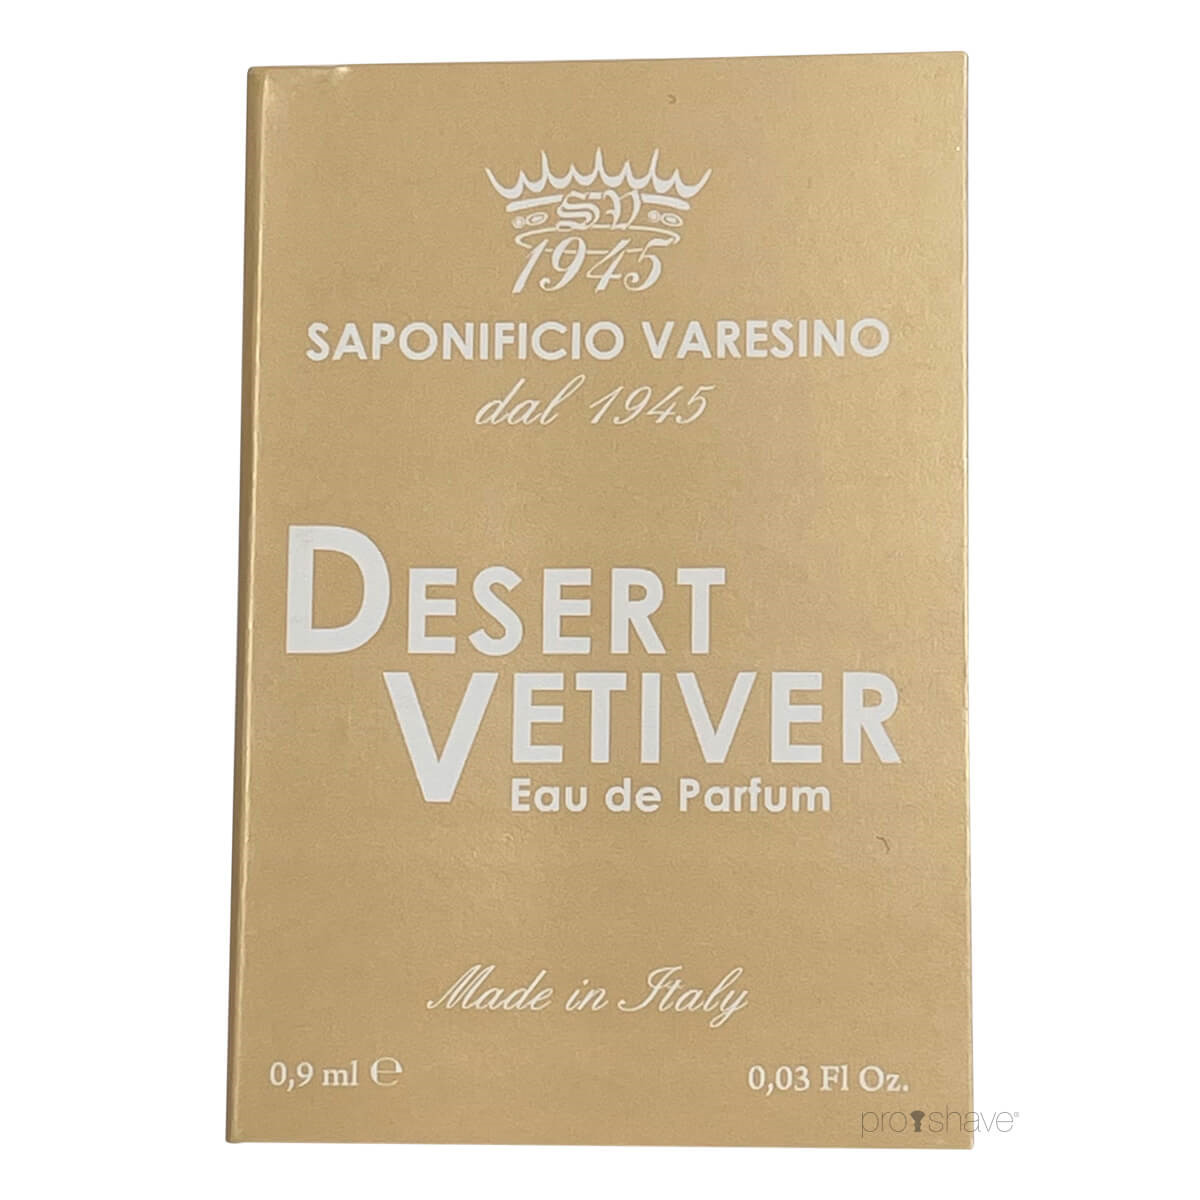 Se Saponificio Varesino Eau de Parfum, Desert Vetiver, Sample, 0.9 ml. hos Proshave